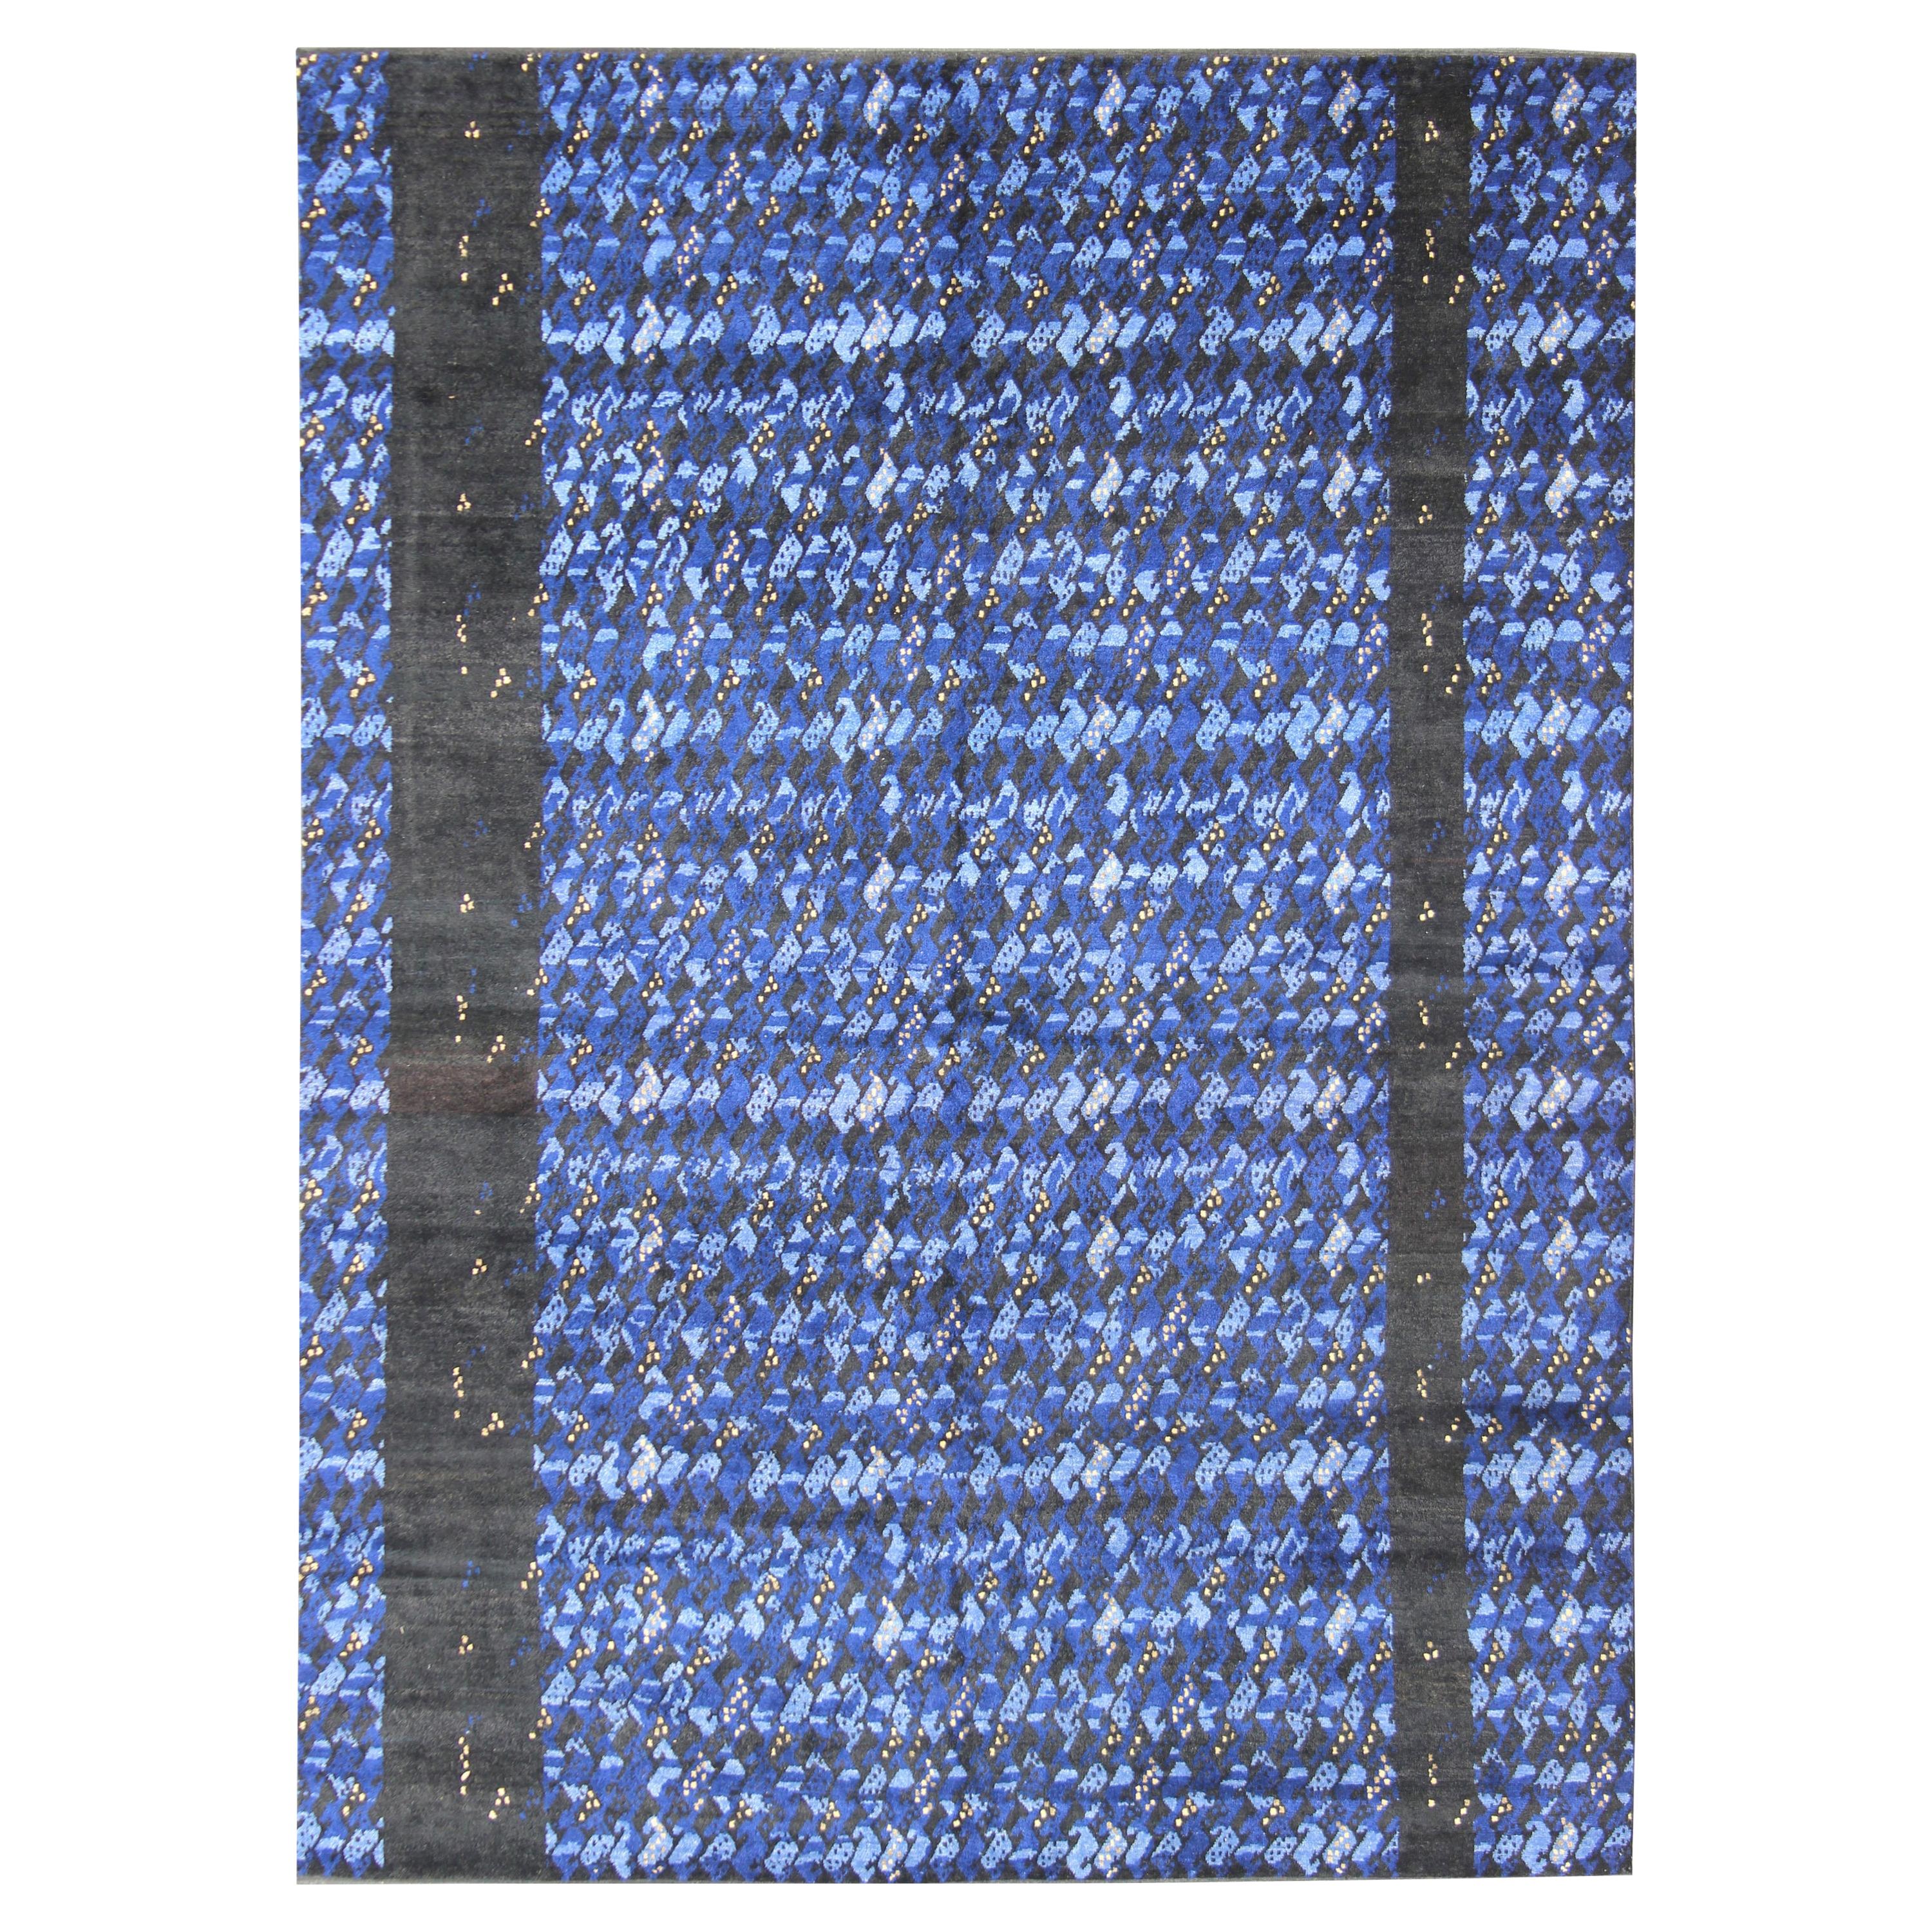 Large Modern Scandinavian/Swedish Design Pile Rug in Mid-Night Blue